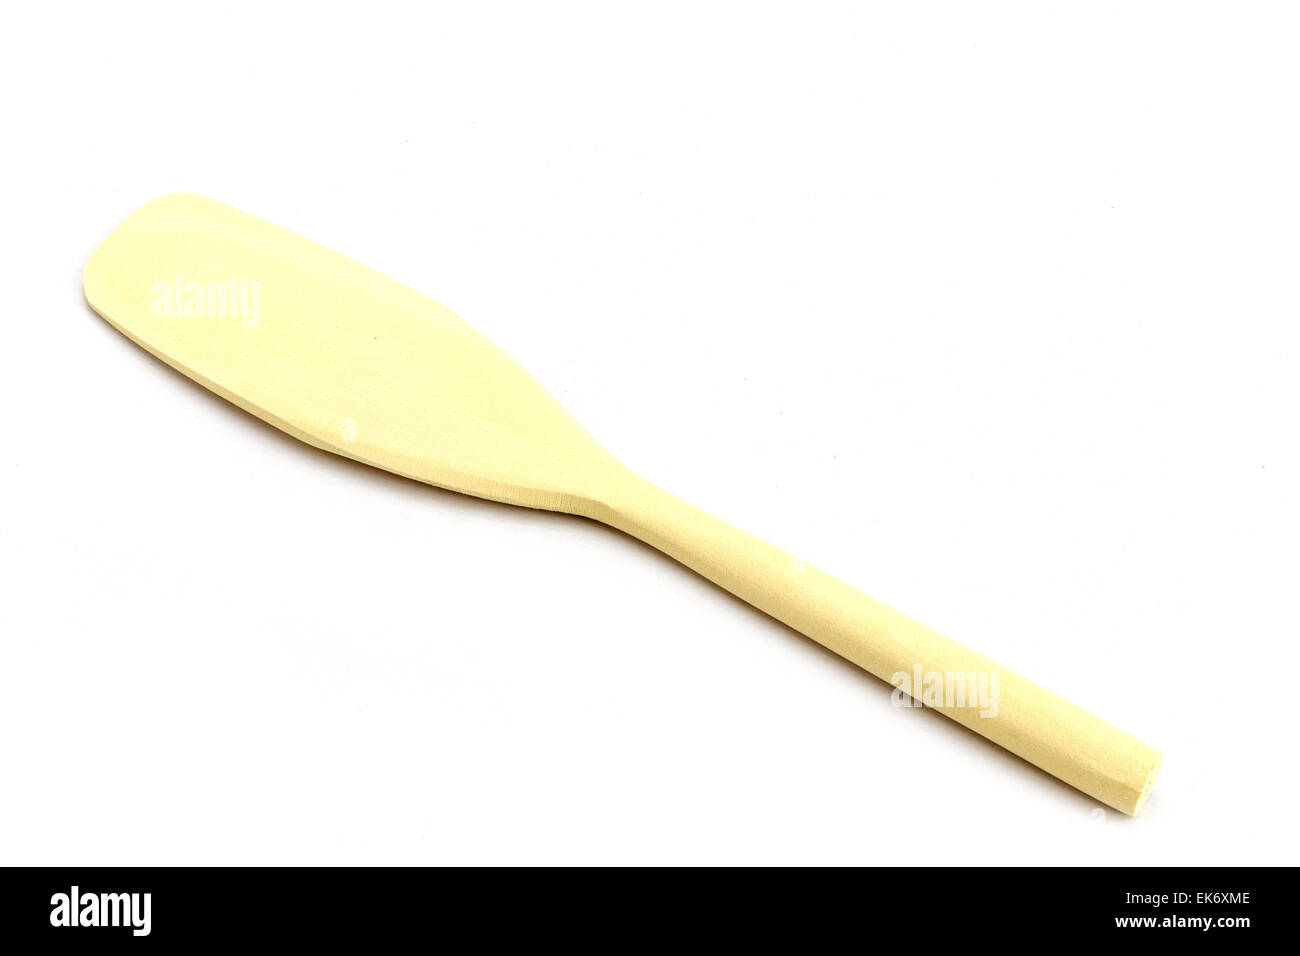 Wooden kitchen utensil isolated on white background Stock Photo